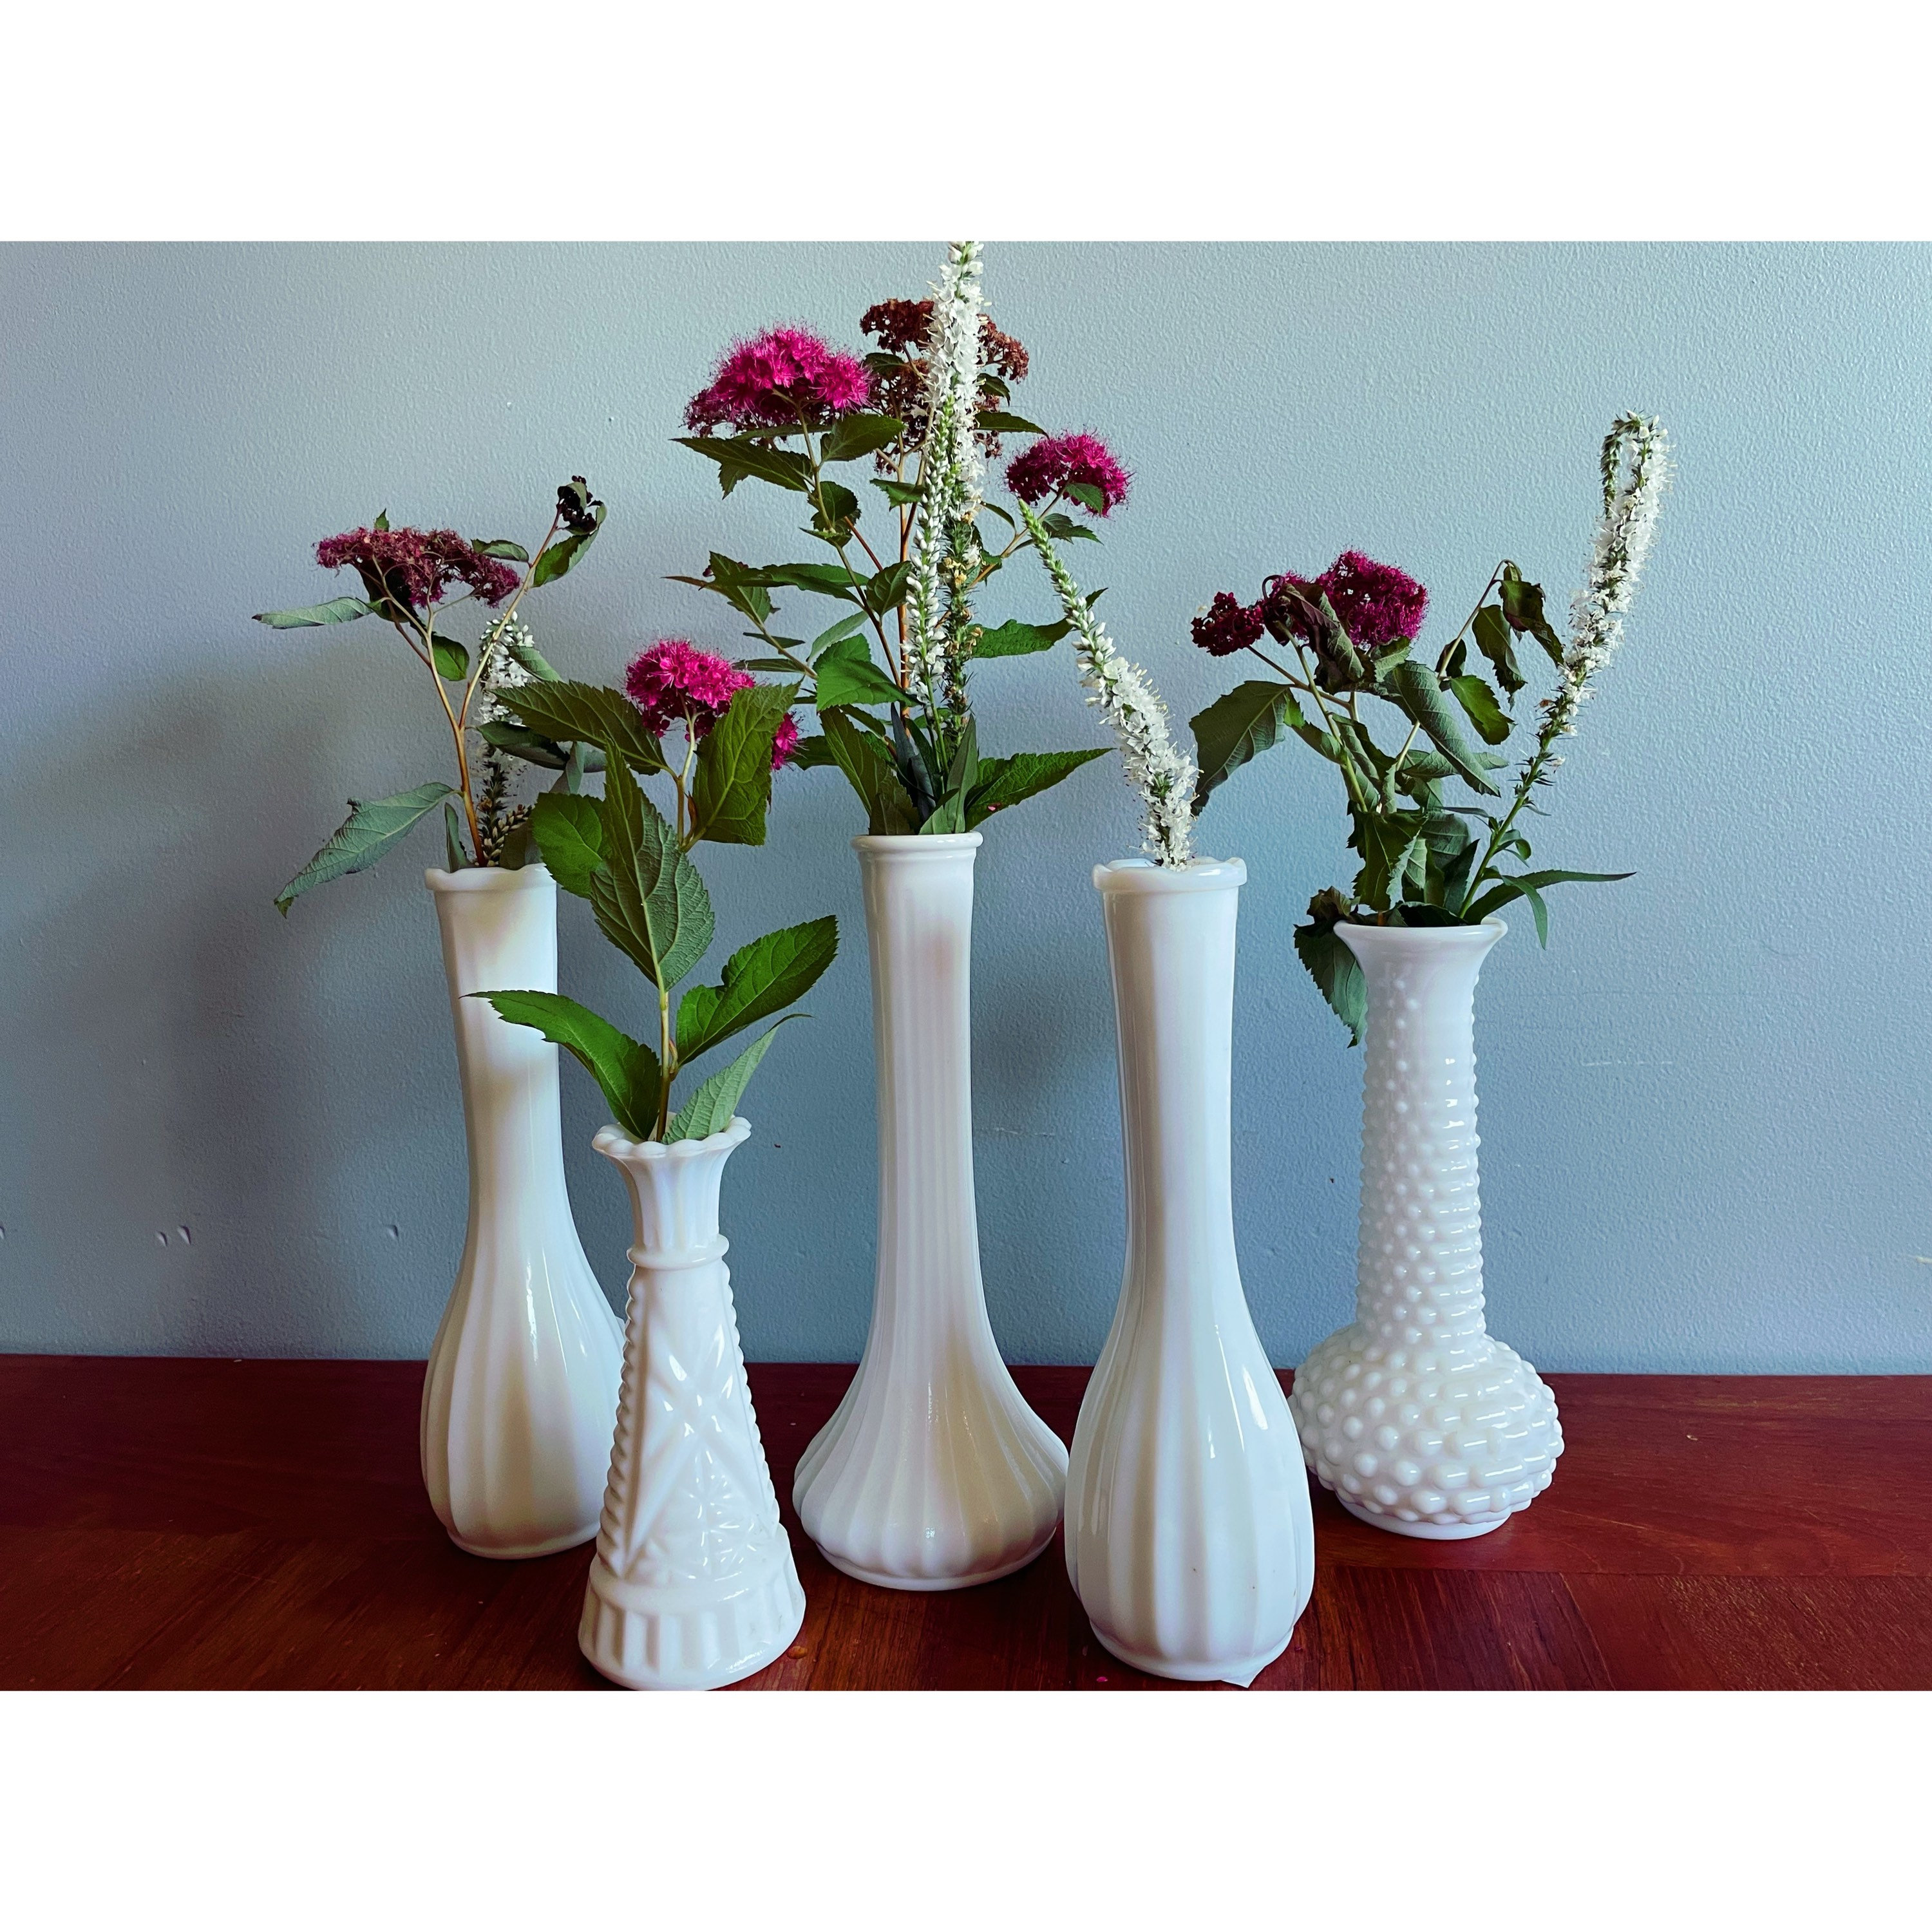 The Wildflower Bud Vases